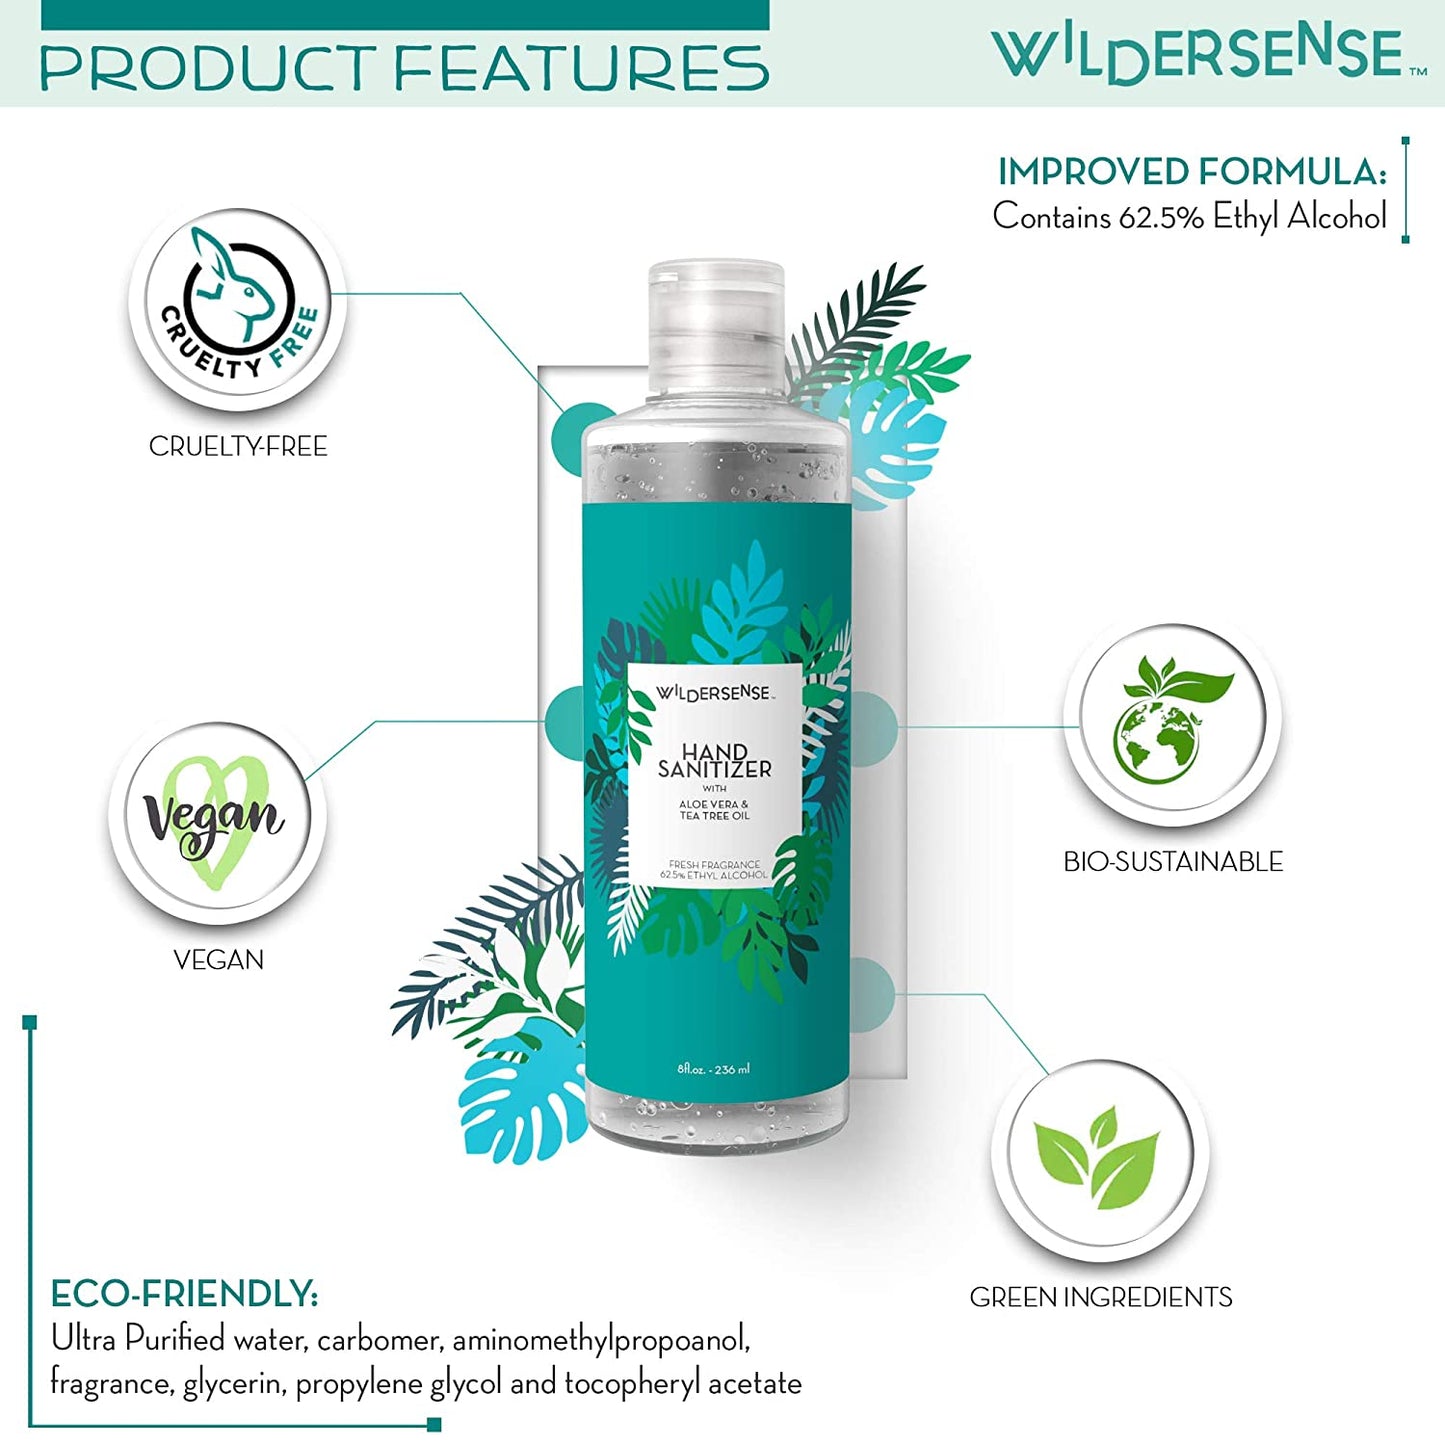 Hand Sanitizer with Aloe Vera and Tea Tree Oil | Wildersense PERSONAL CARE WILDERSENSE 